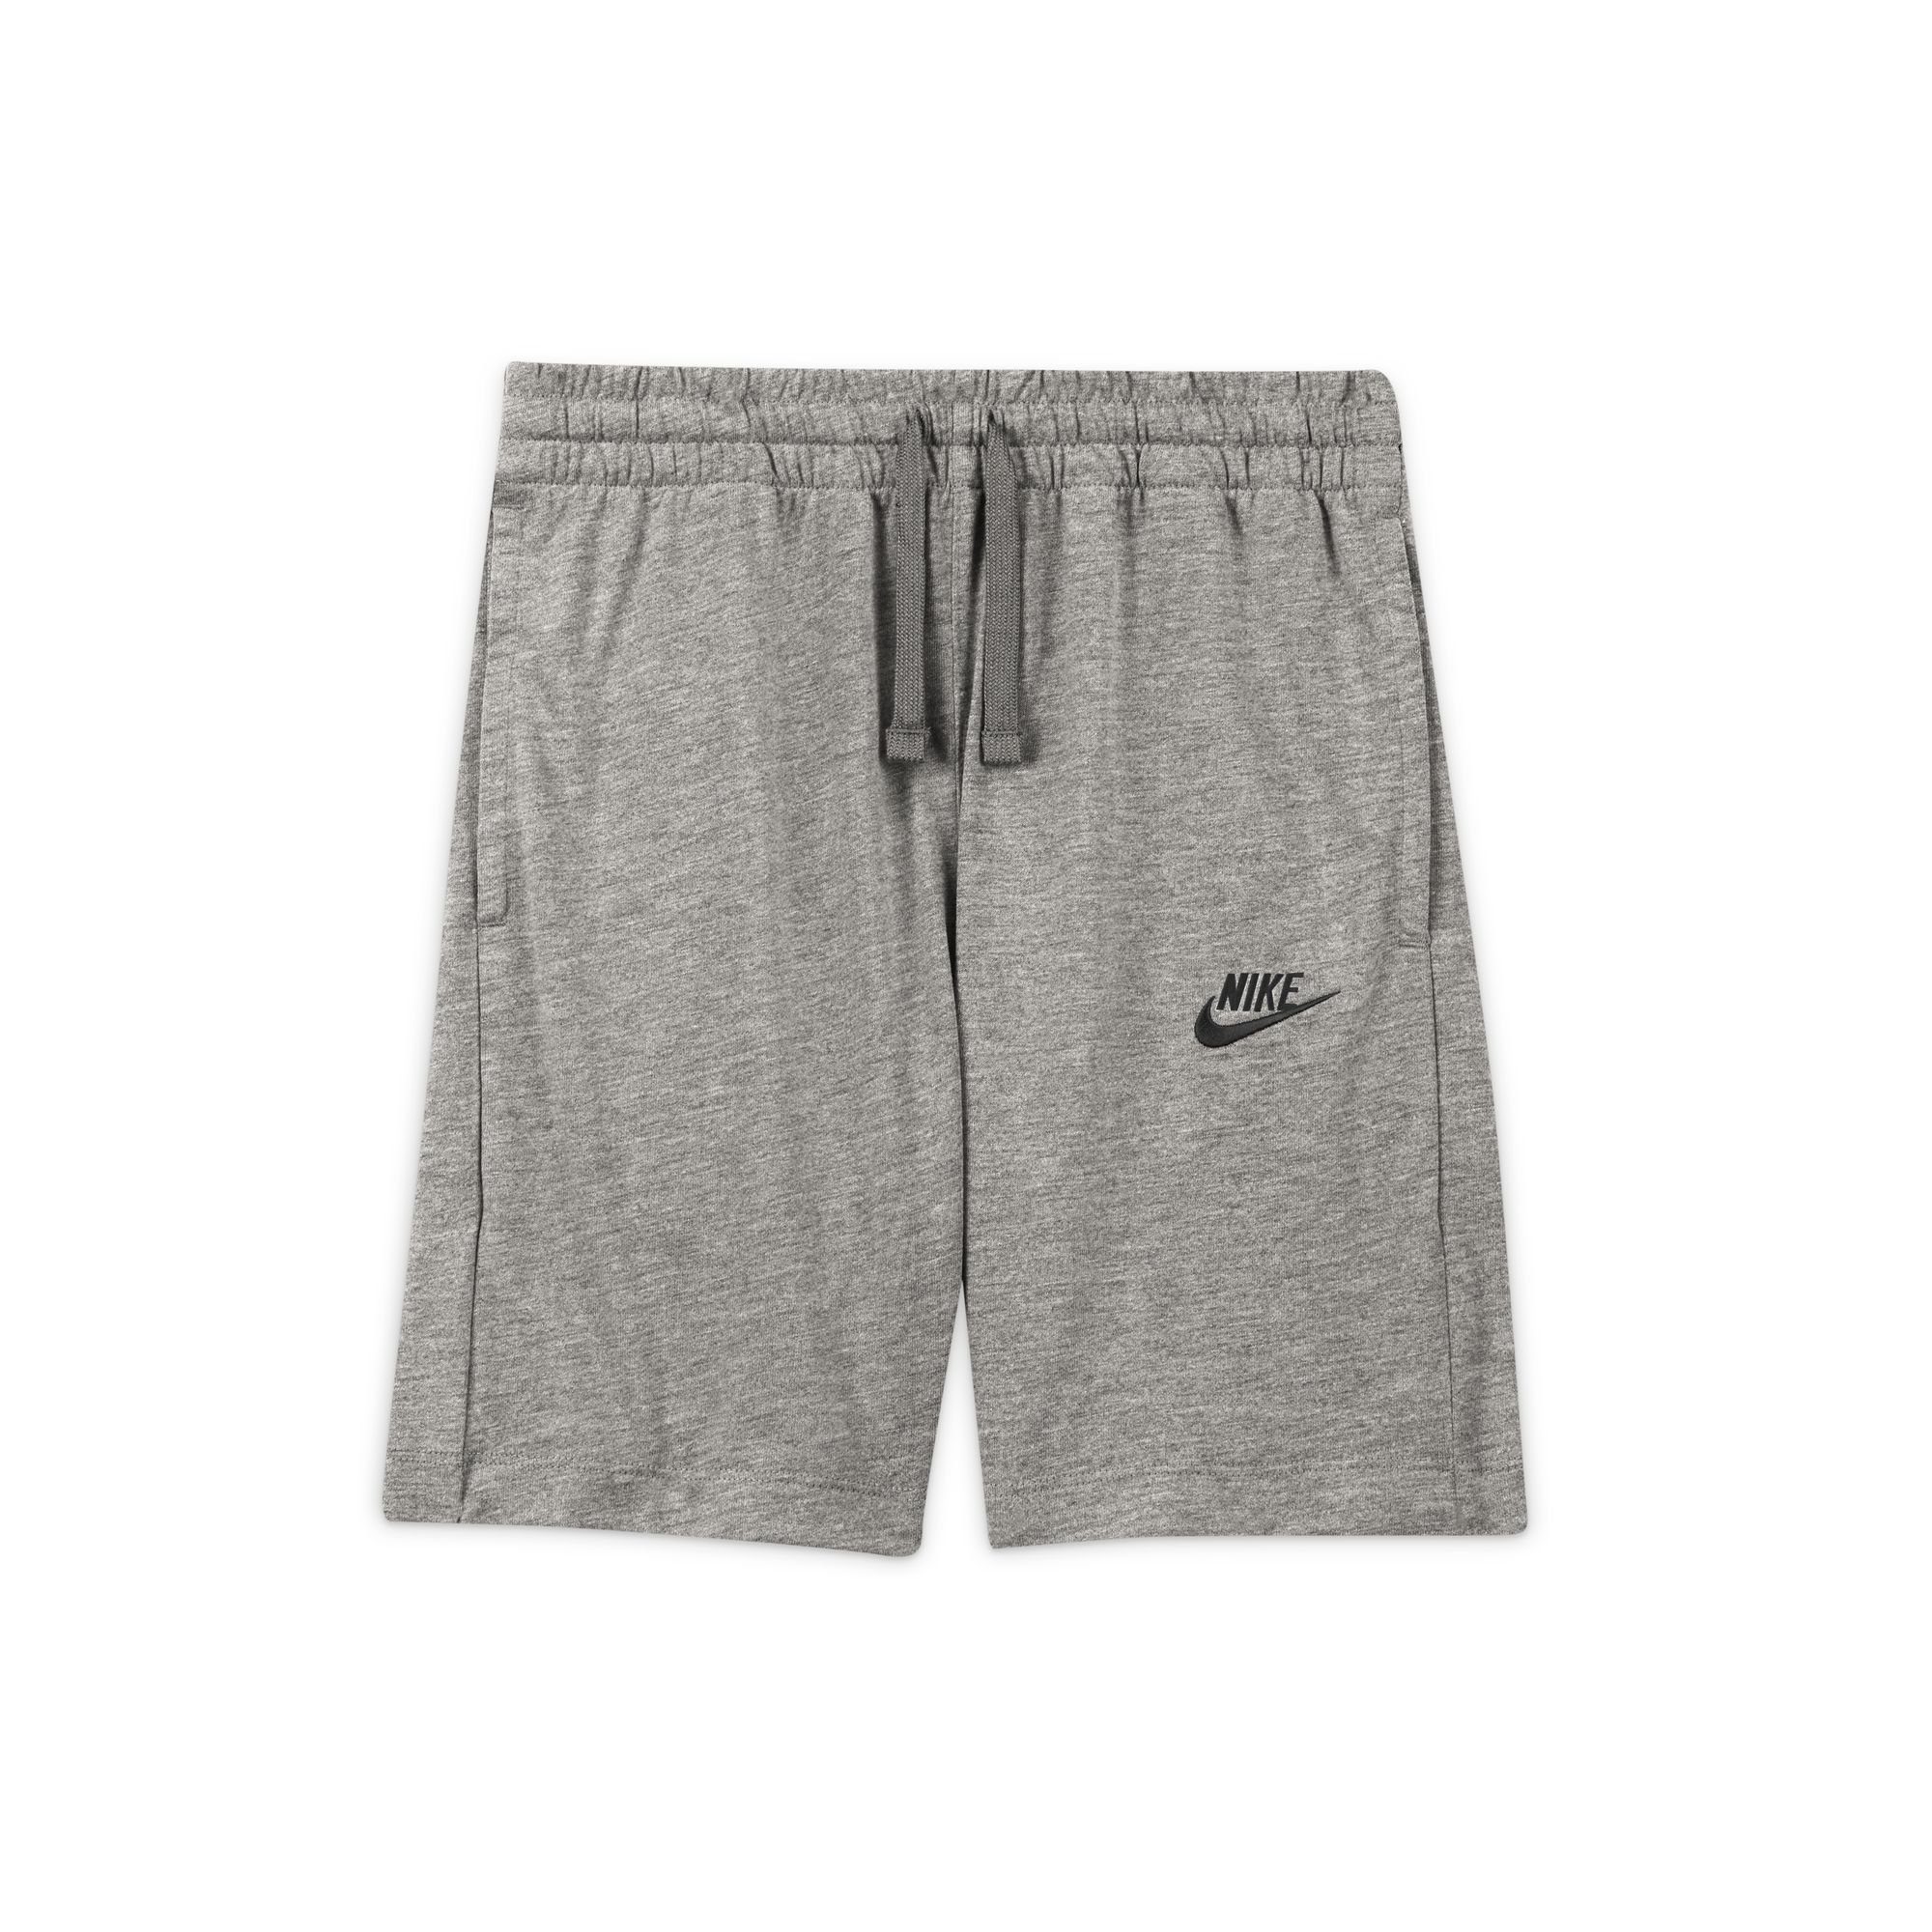 SHORTS KIDS' Nike BIG JERSEY (BOYS) Shorts grau Sportswear